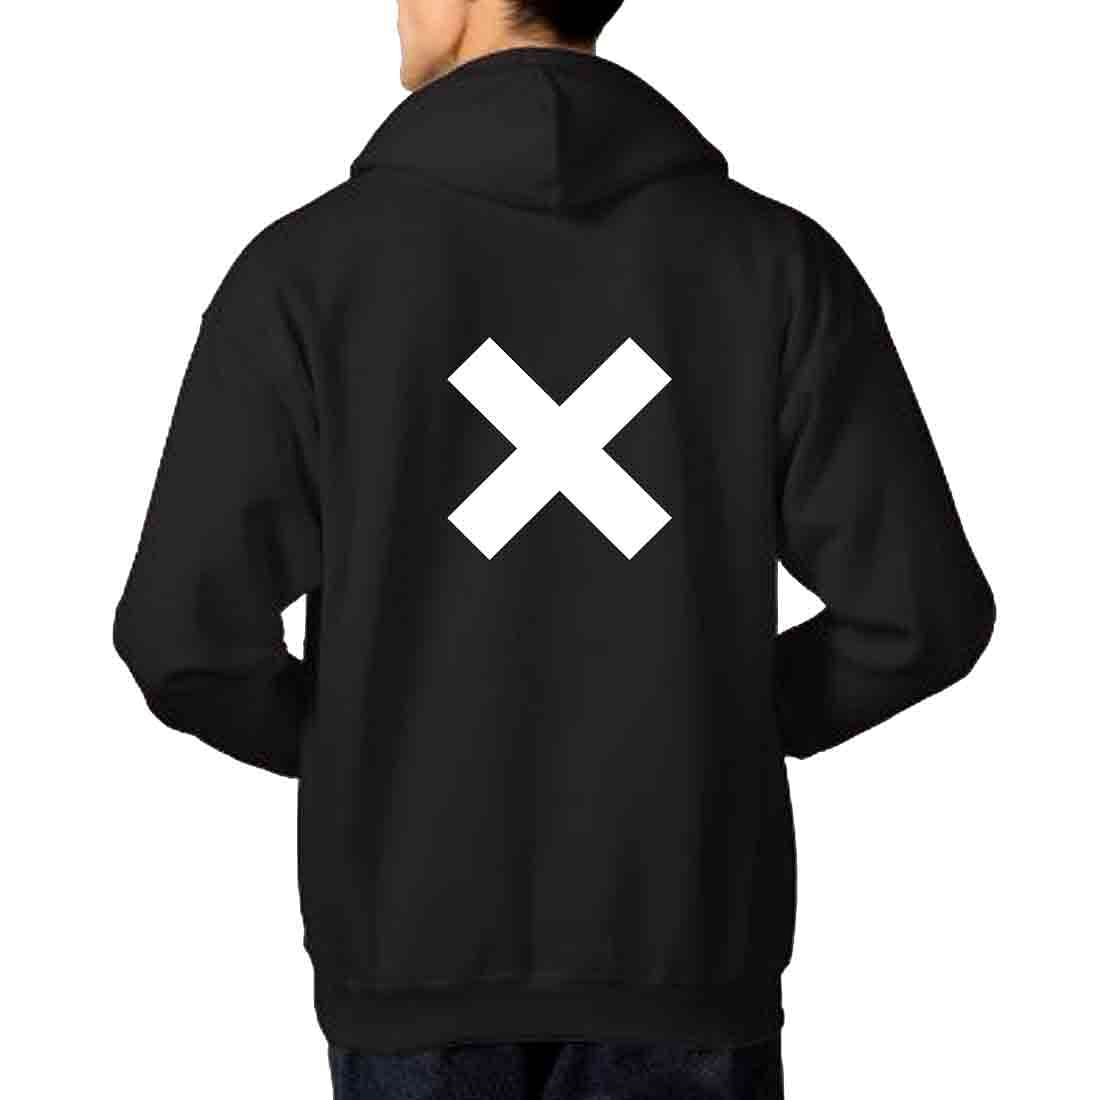 Nutcase Hoodie Stylish Jumper Sweatshirt Unisex ( Black ) - No Cross Nutcase